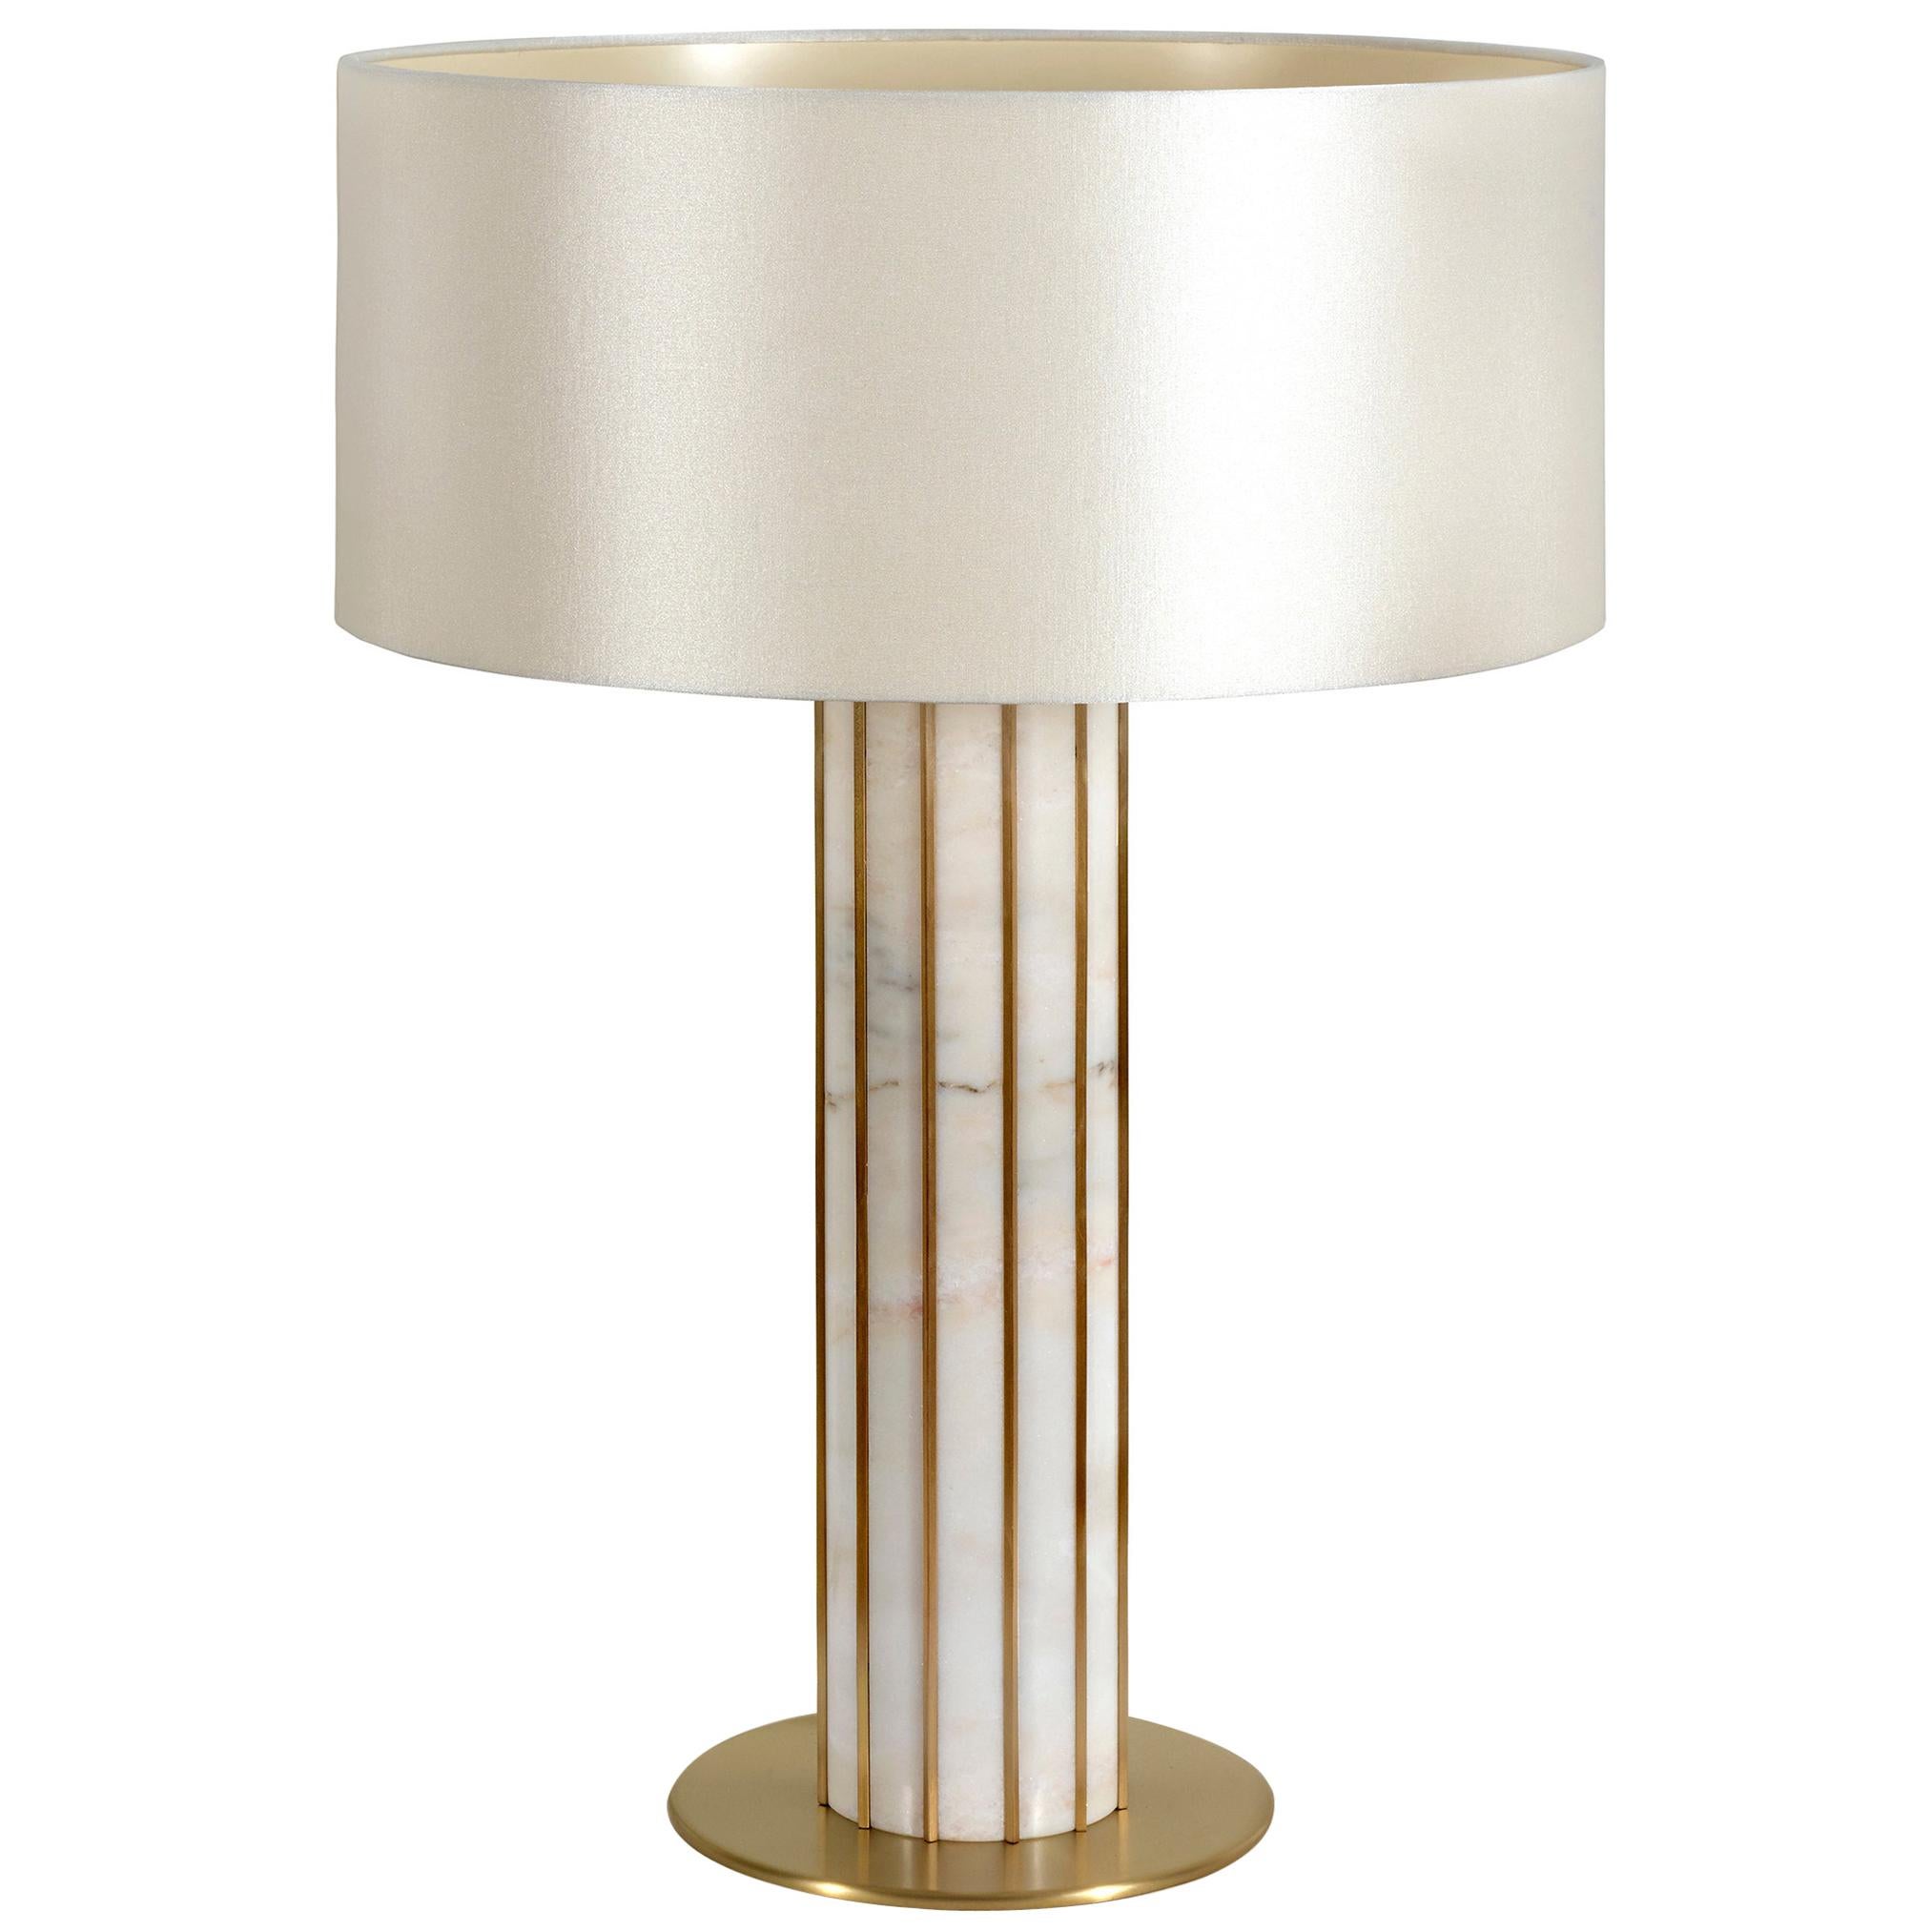 Seagram Table Lamp, Estremoz & Brass, InsidherLand by Joana Santos Barbosa